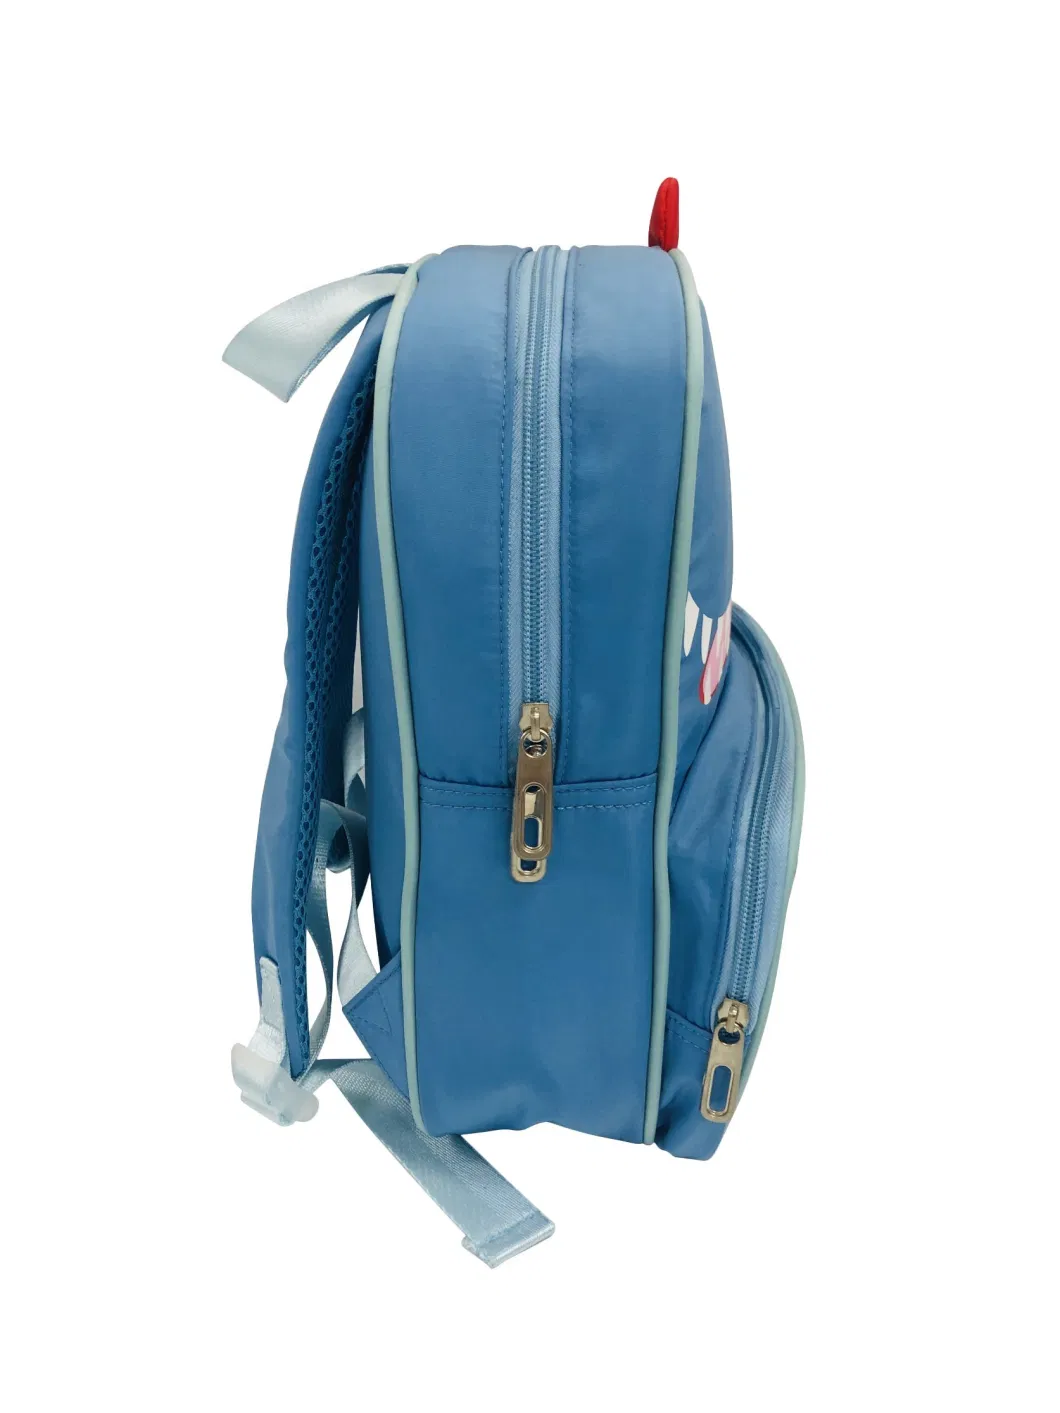 Toddler Kid Boy Girl Cartoon Dinosaur School Bag Oxford Cloth Fashion New Children Backpack Shoulder Bag